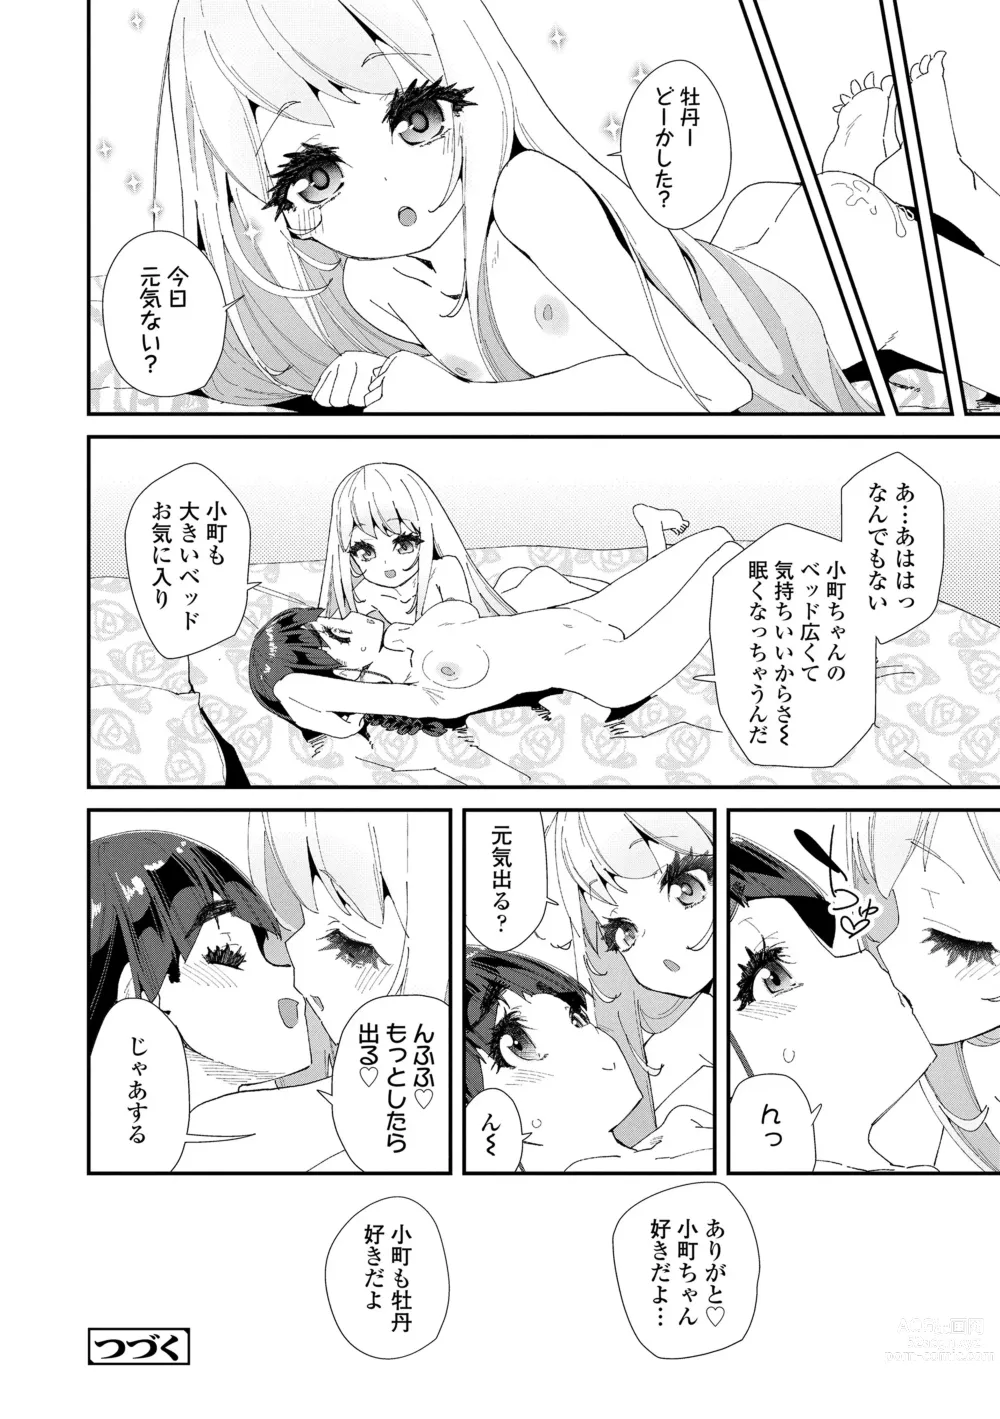 Page 30 of manga Mitsu to Chou